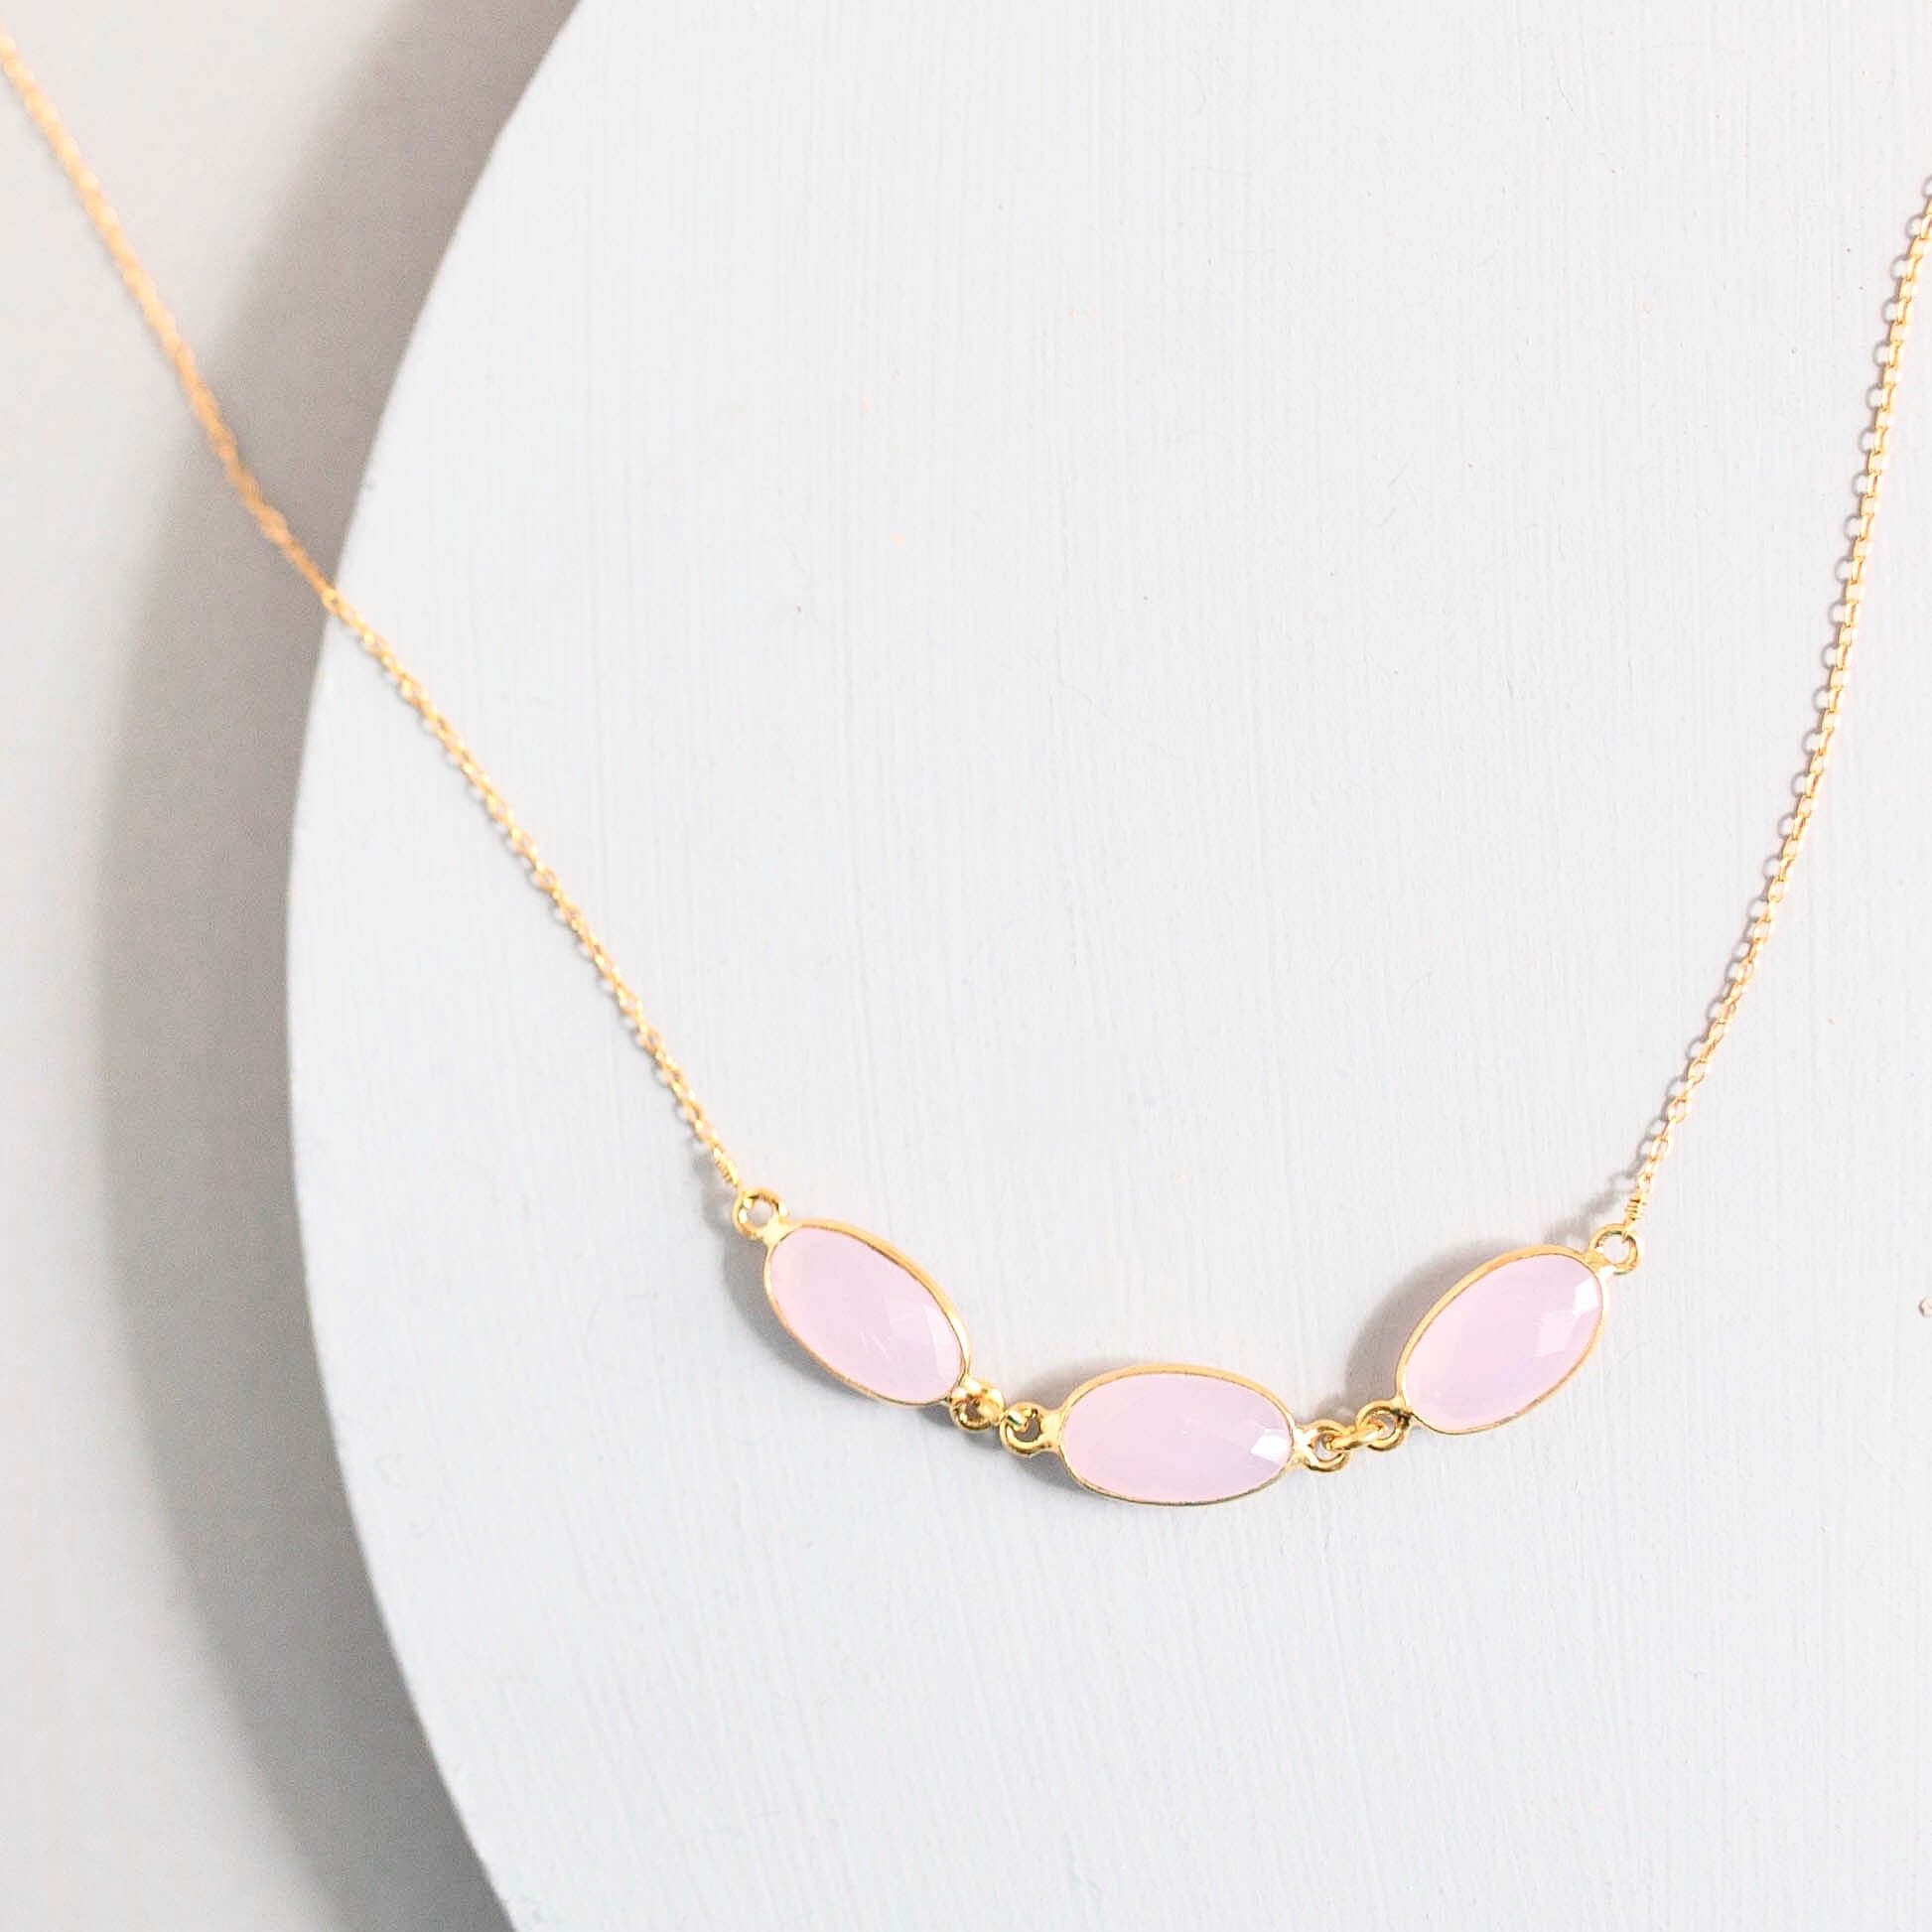 Gold Chic and easy everyday necklace with three bezel-set rose quartz gemstones